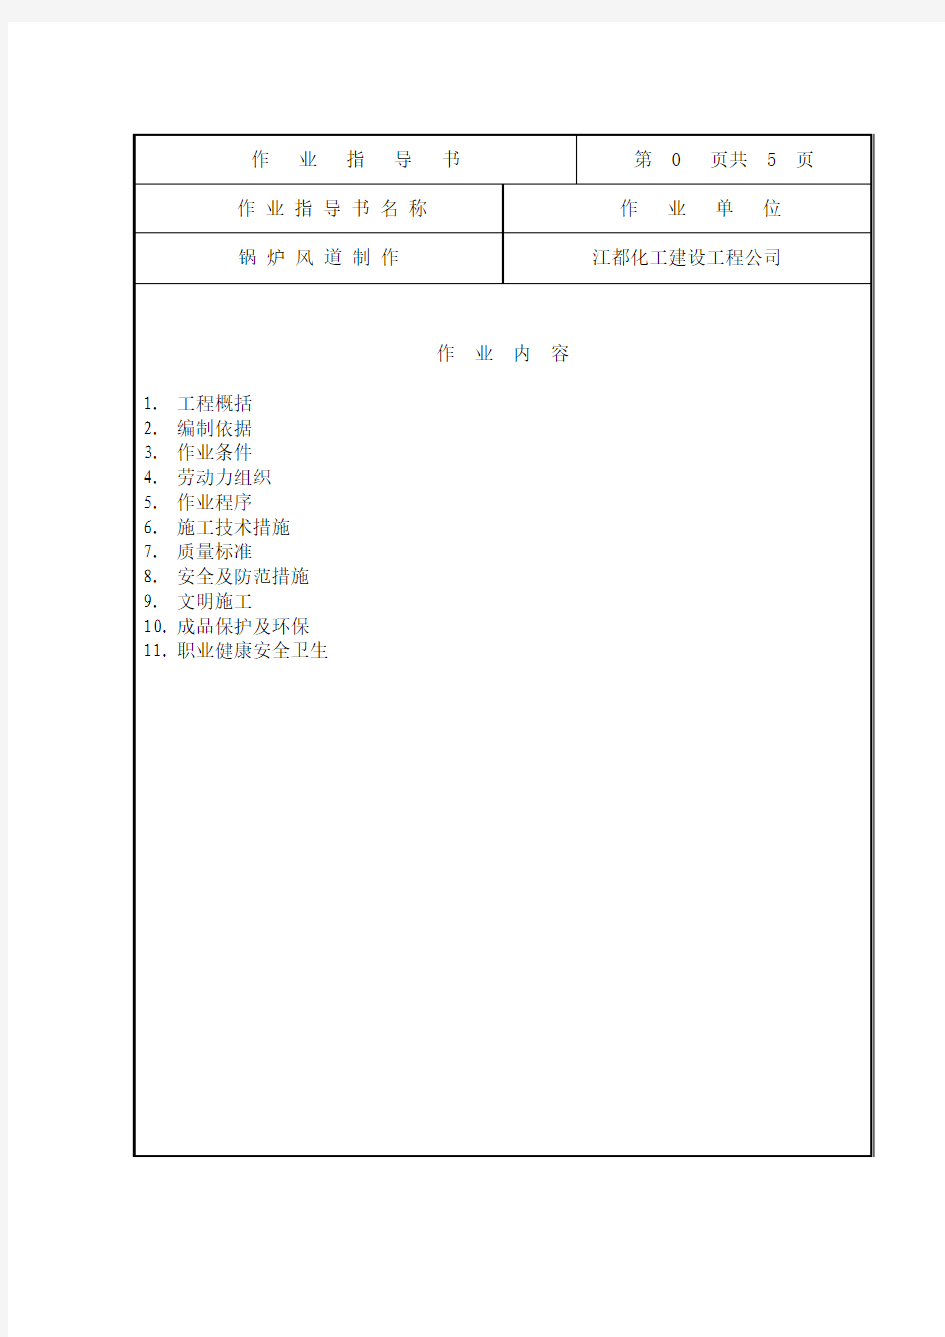 BOP-07-01 利港锅炉风道制作作业指导书